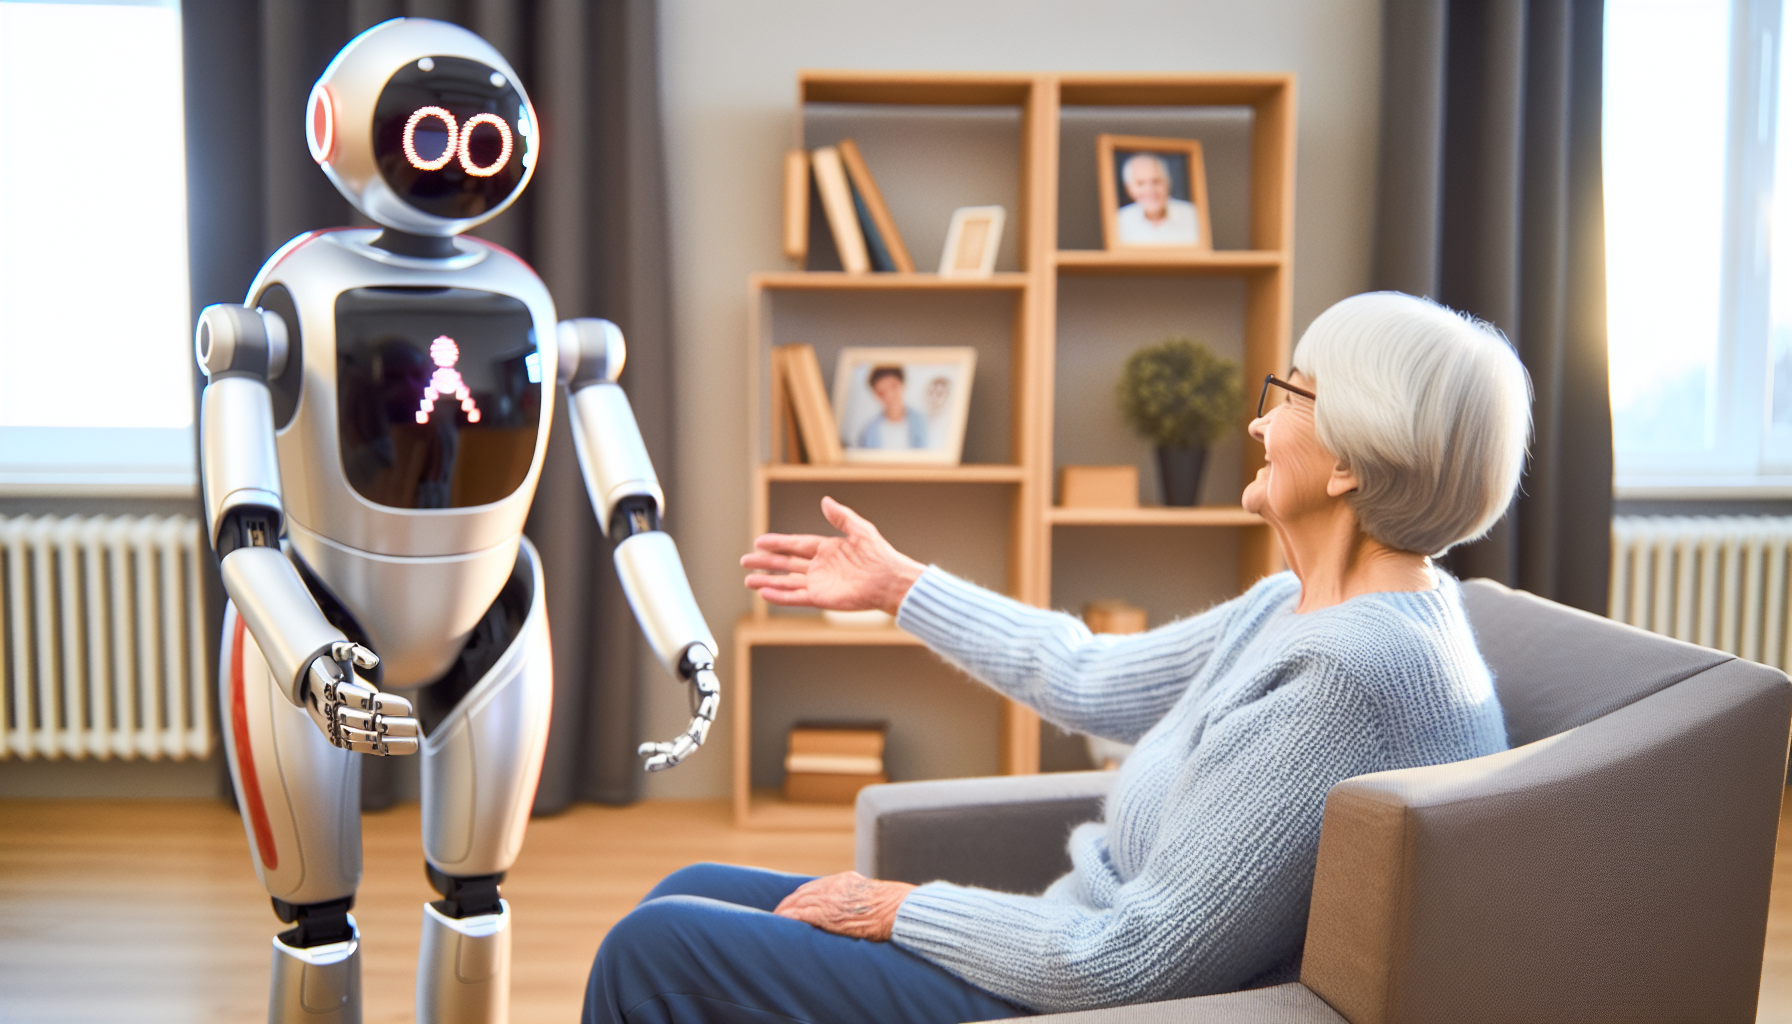 A humanoid robot assisting a senior citizen